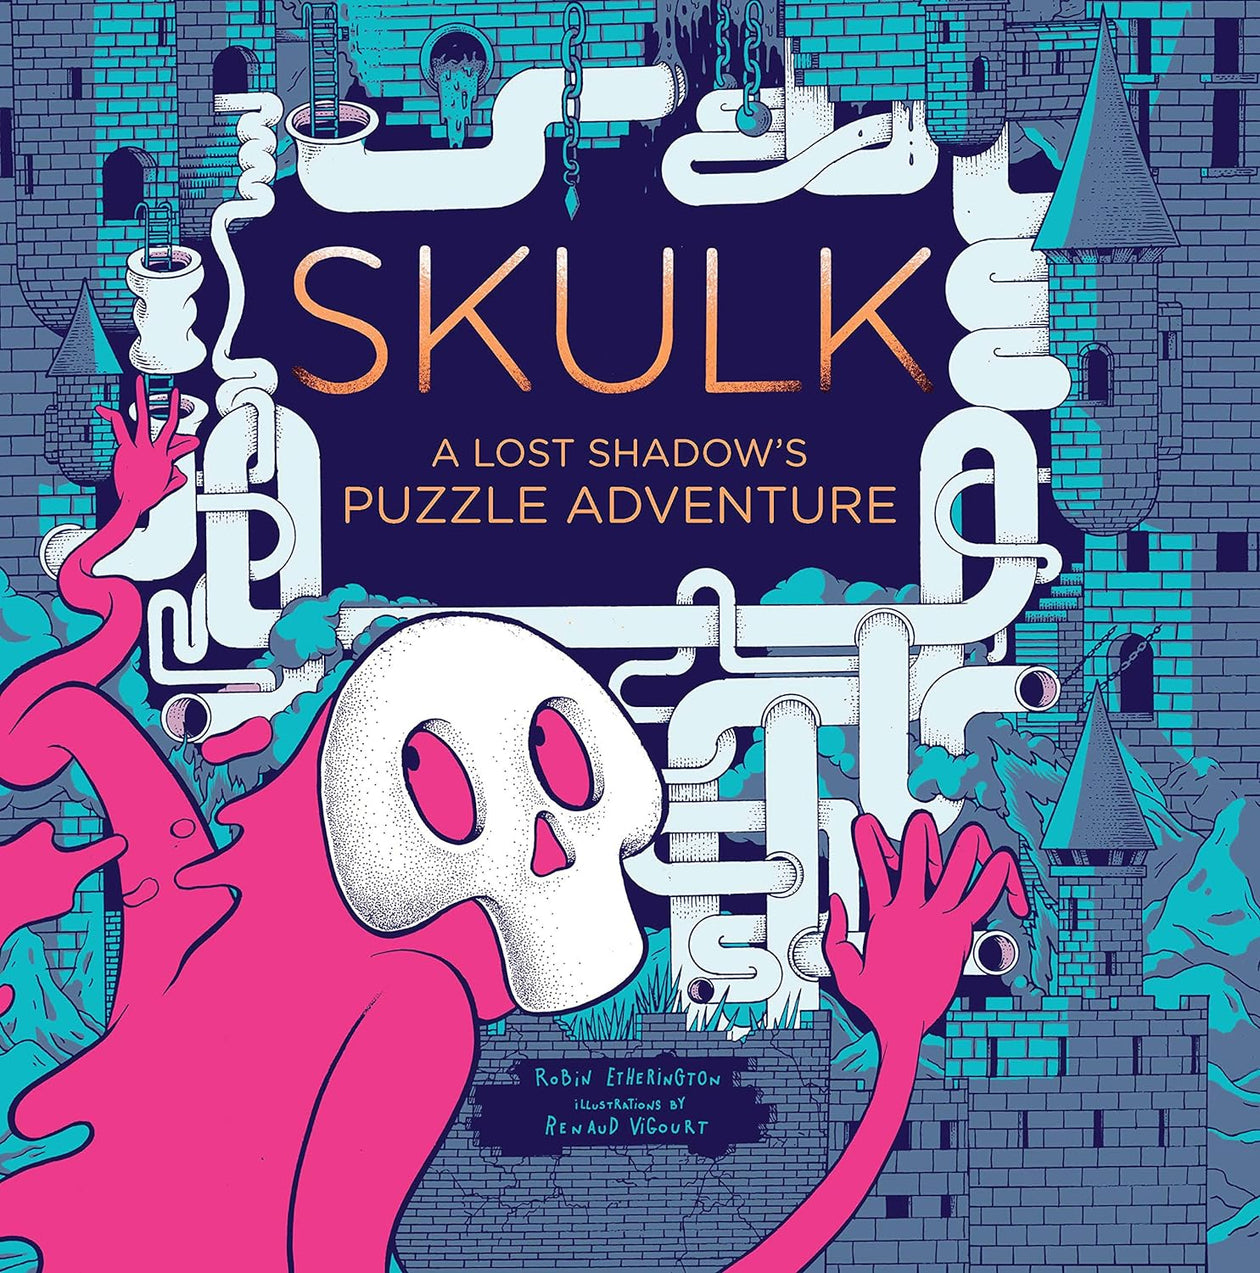 Robin Etherington: Skulk, A Lost Shadow's Puzzle Adventure, illustrated by Renaud Vigourt